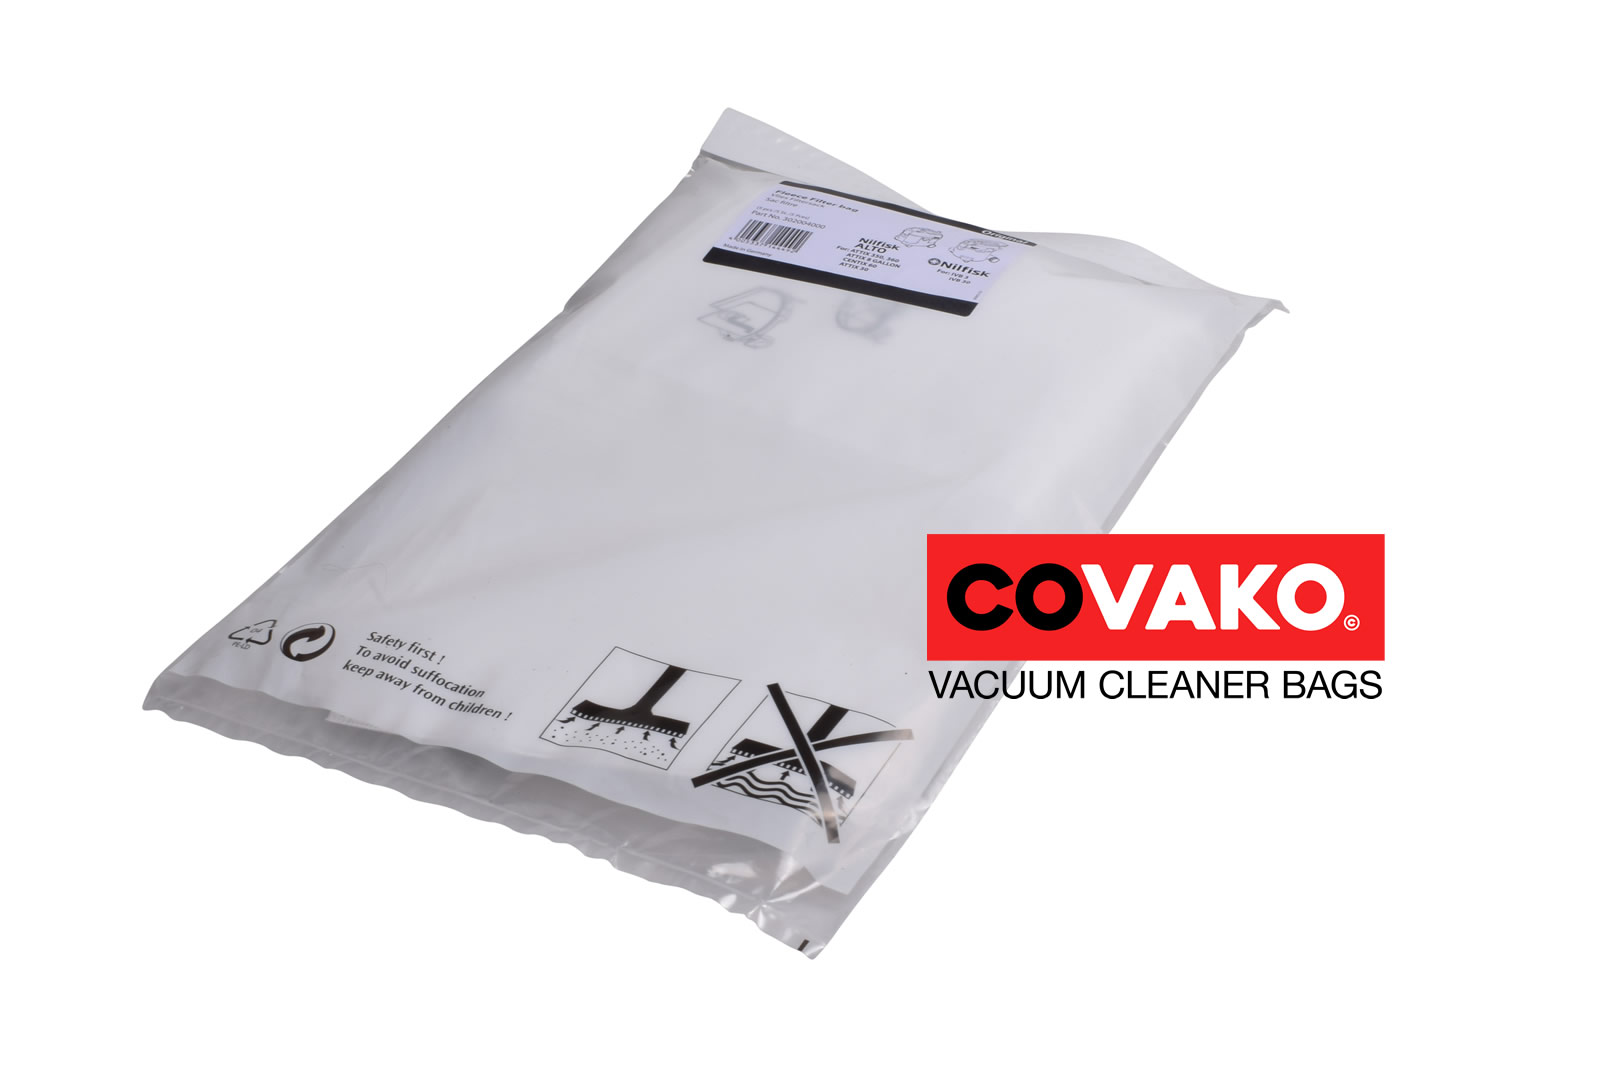 Wap Attix 360-21 / Synthesis - Wap vacuum cleaner bags